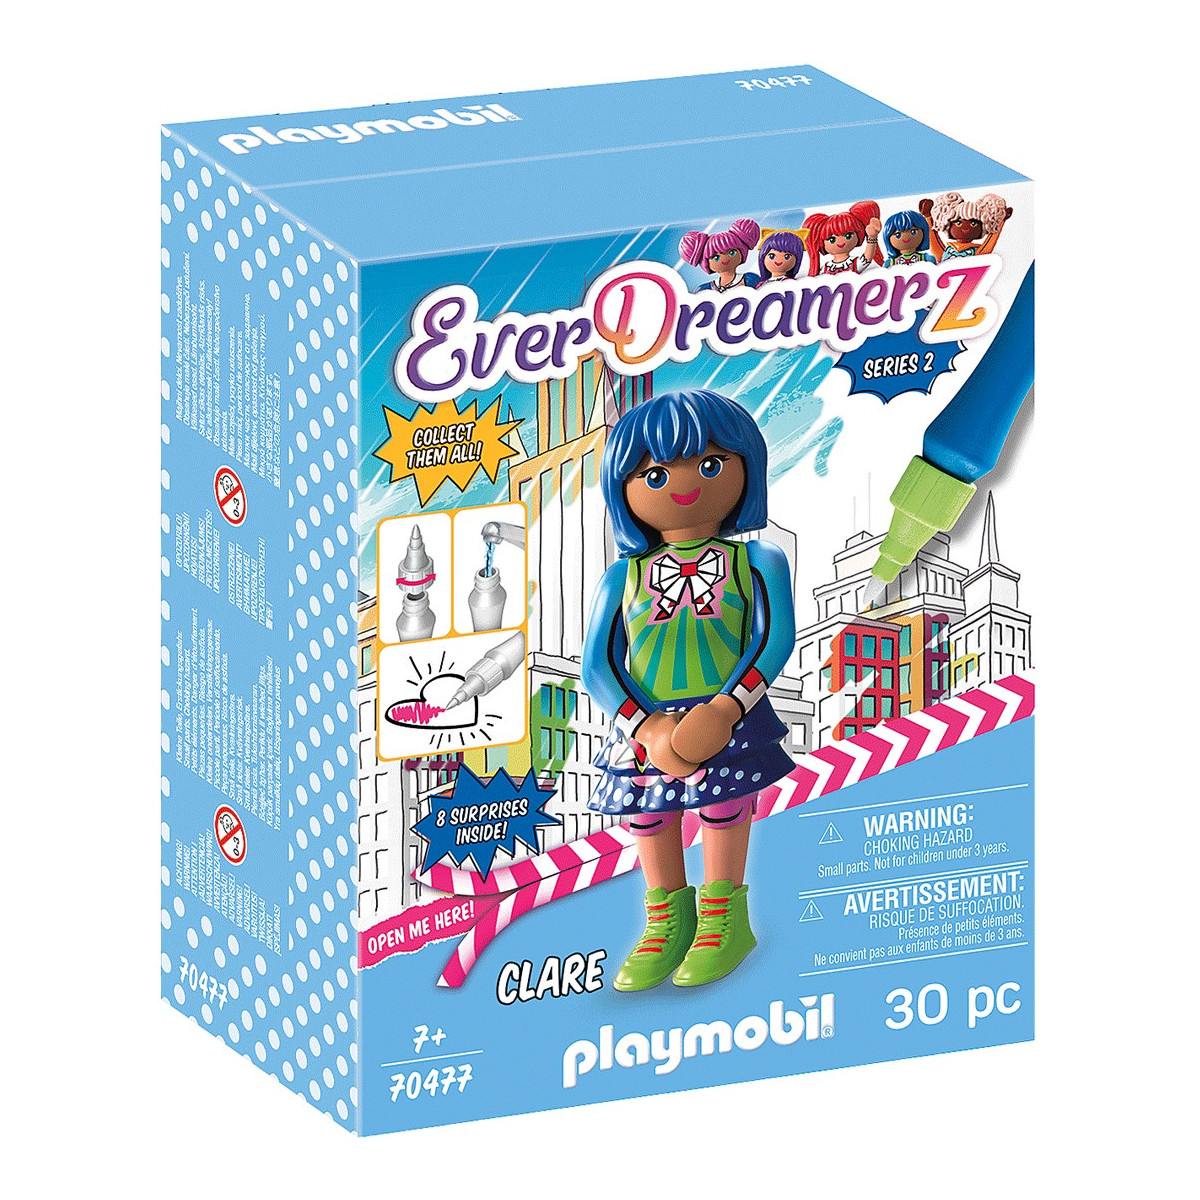 Playmobil comic world figures clare